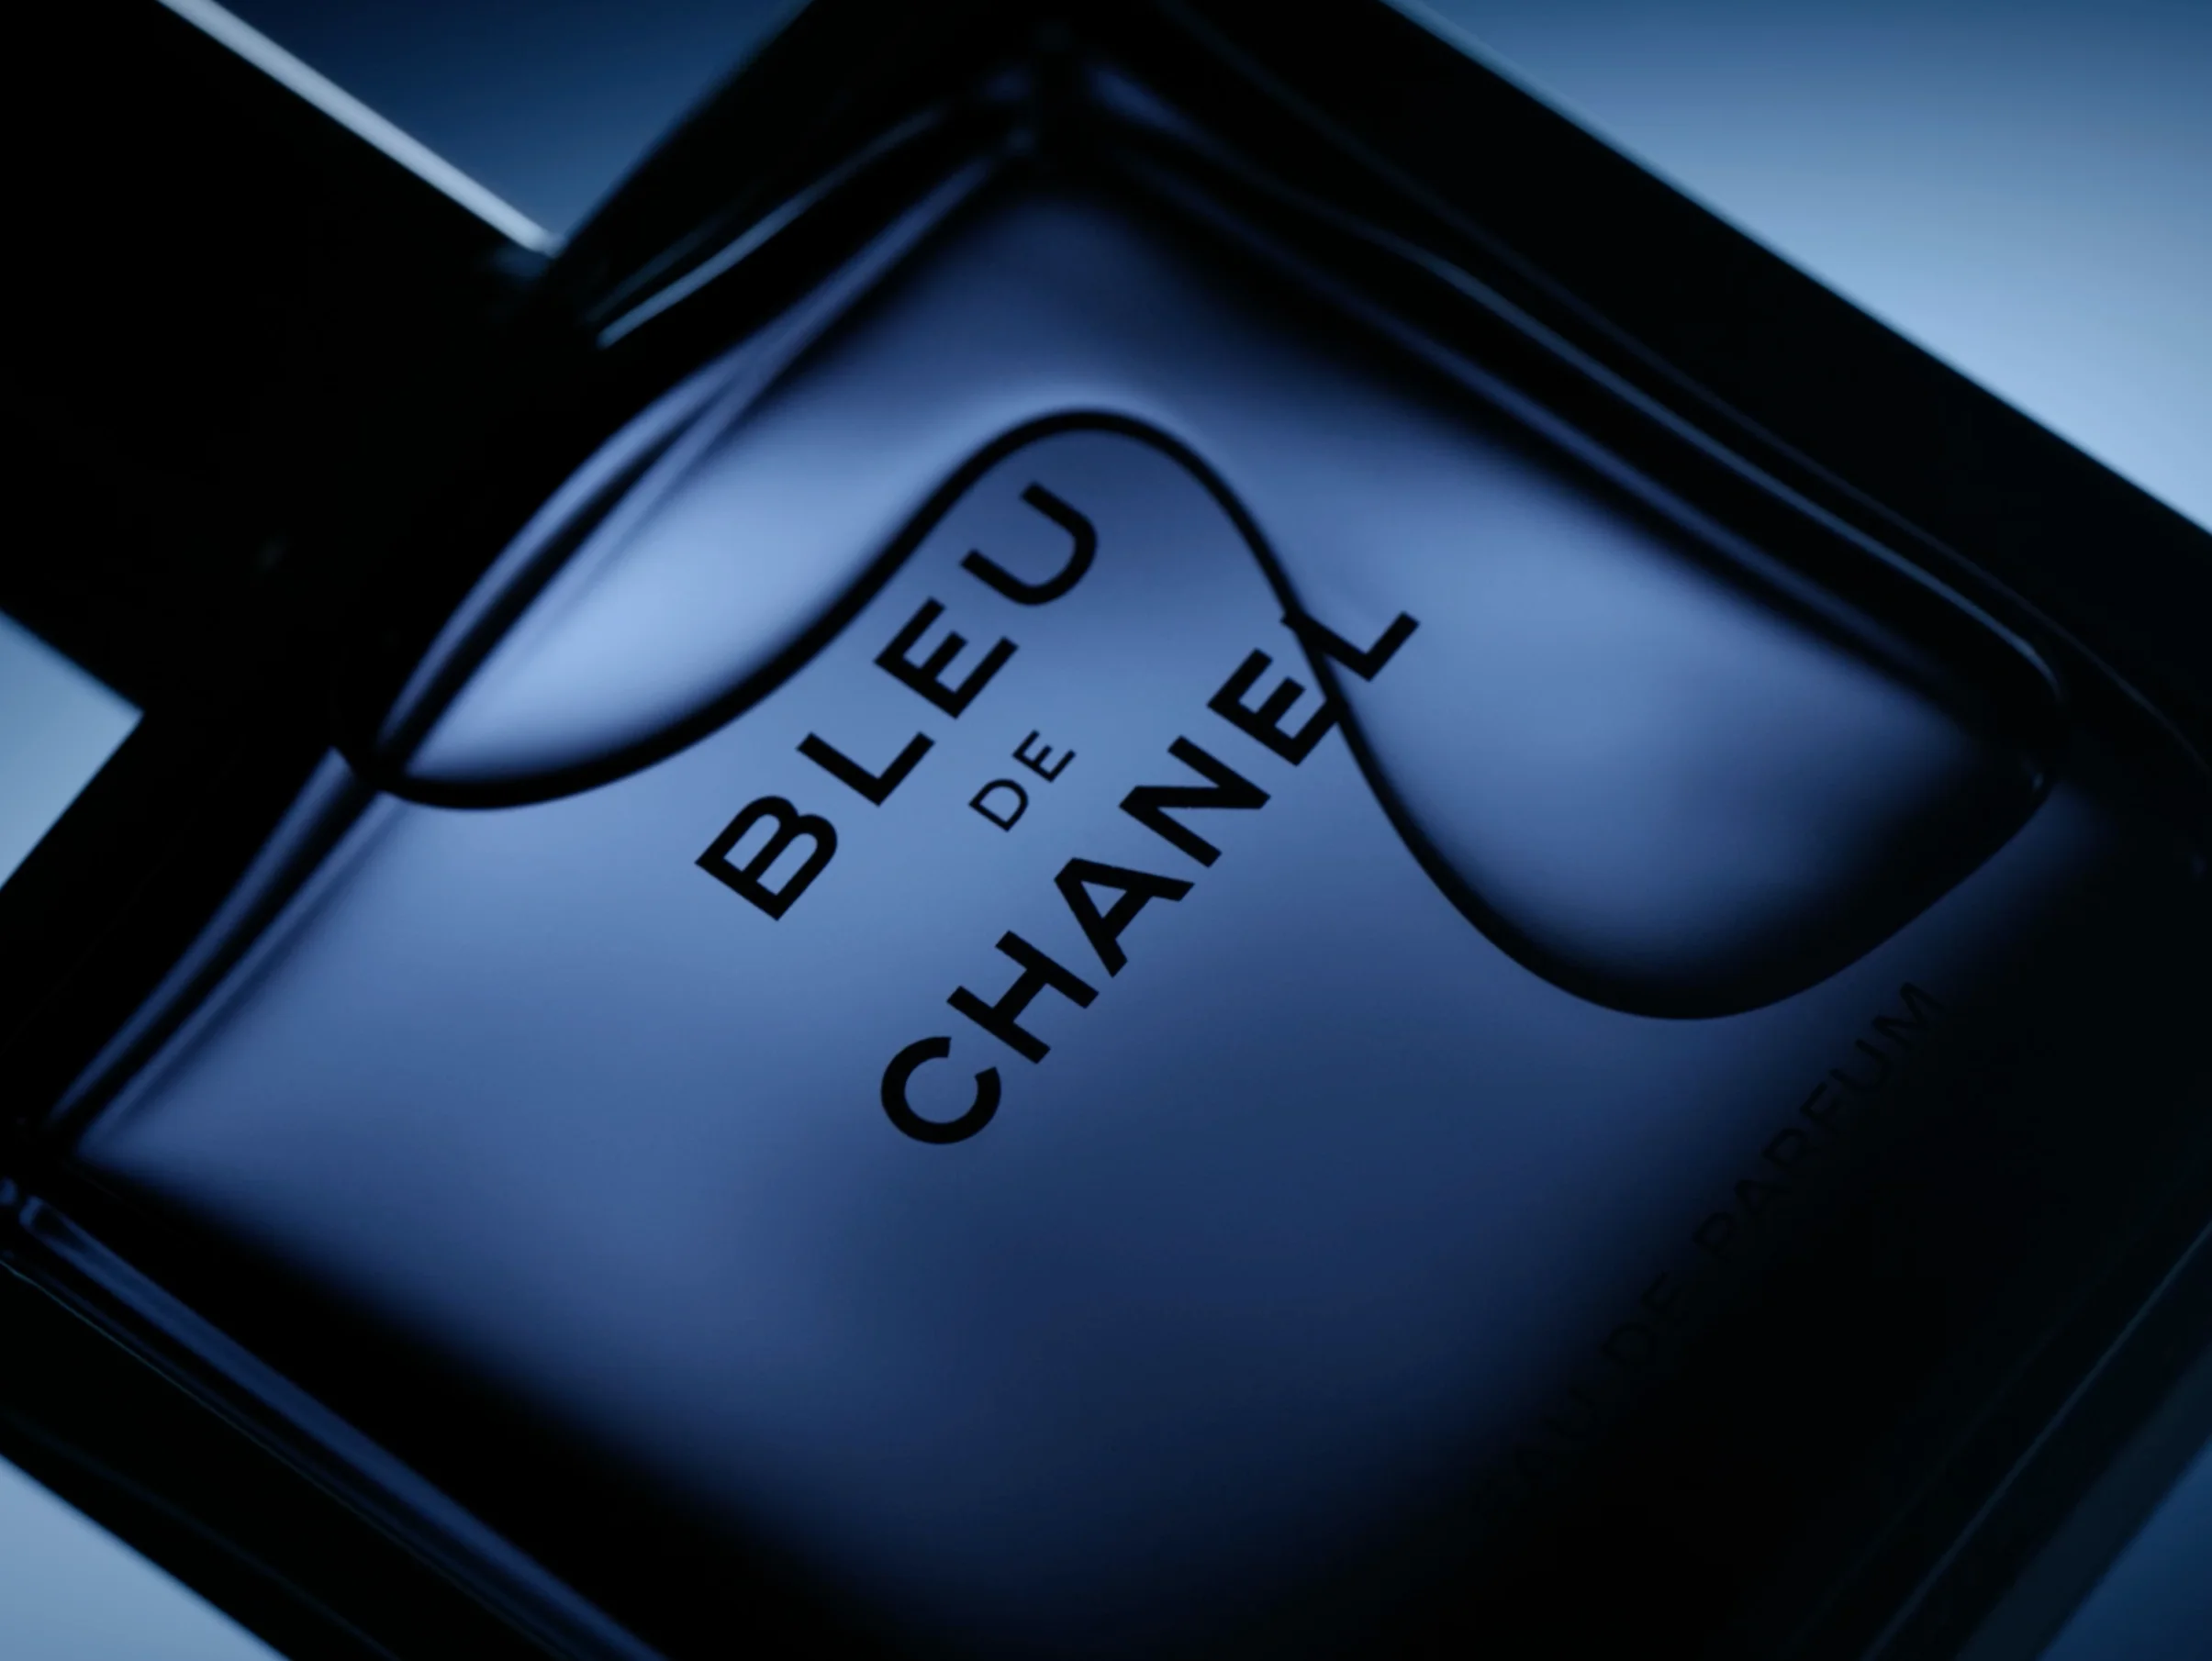 BLEU de CHANEL, the 2010 film with Gaspard Ulliel – CHANEL Fragrance 